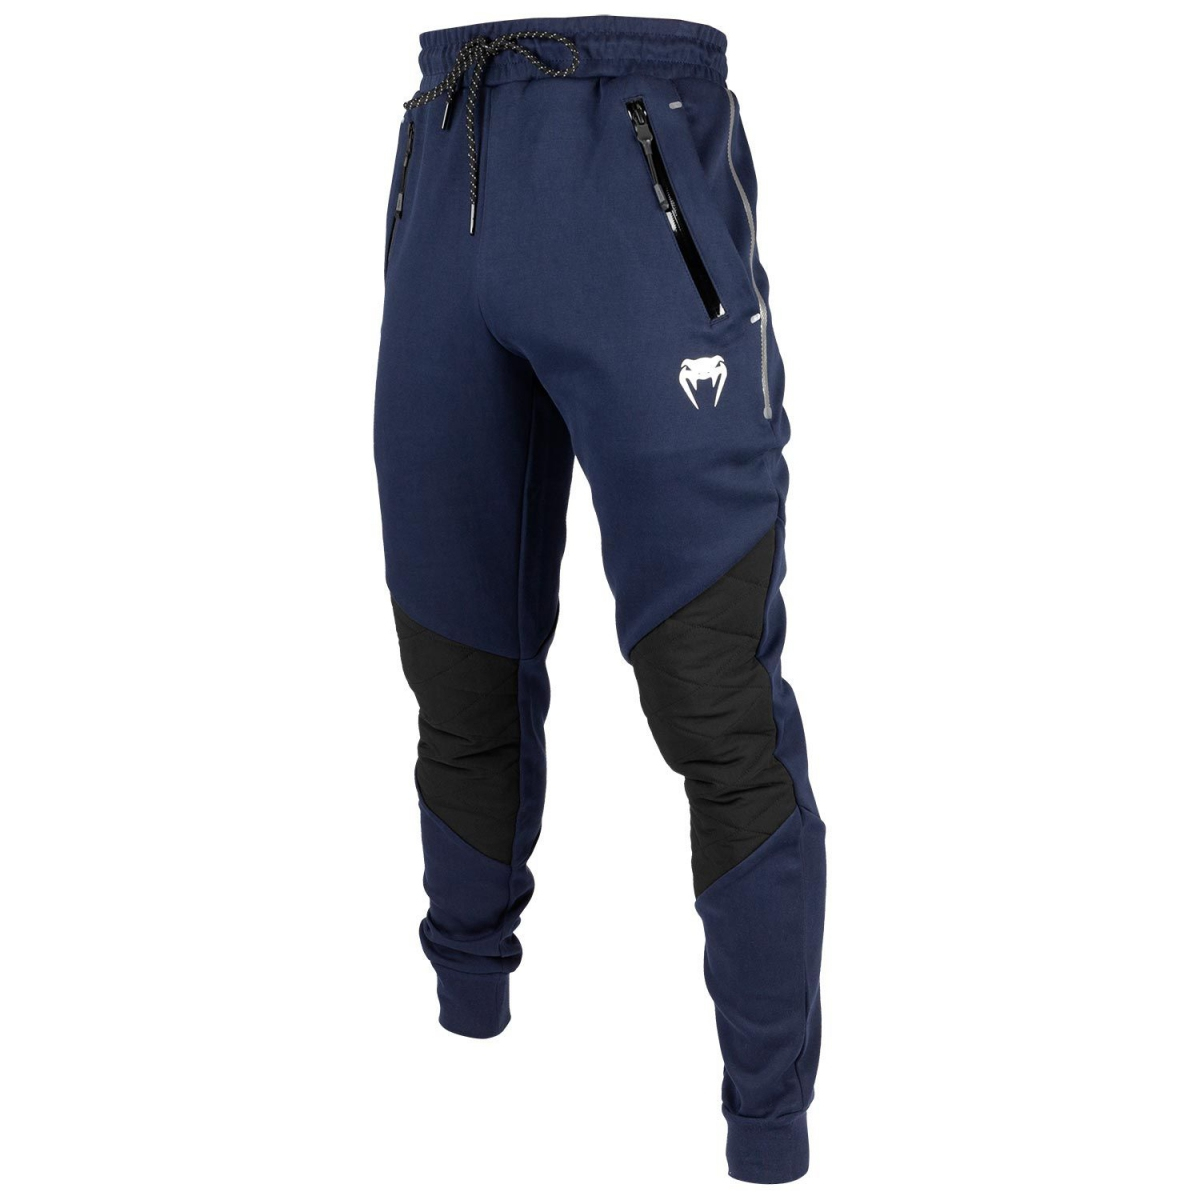 Спортивные штаны Venum Laser Evo Joggings Navy Silver